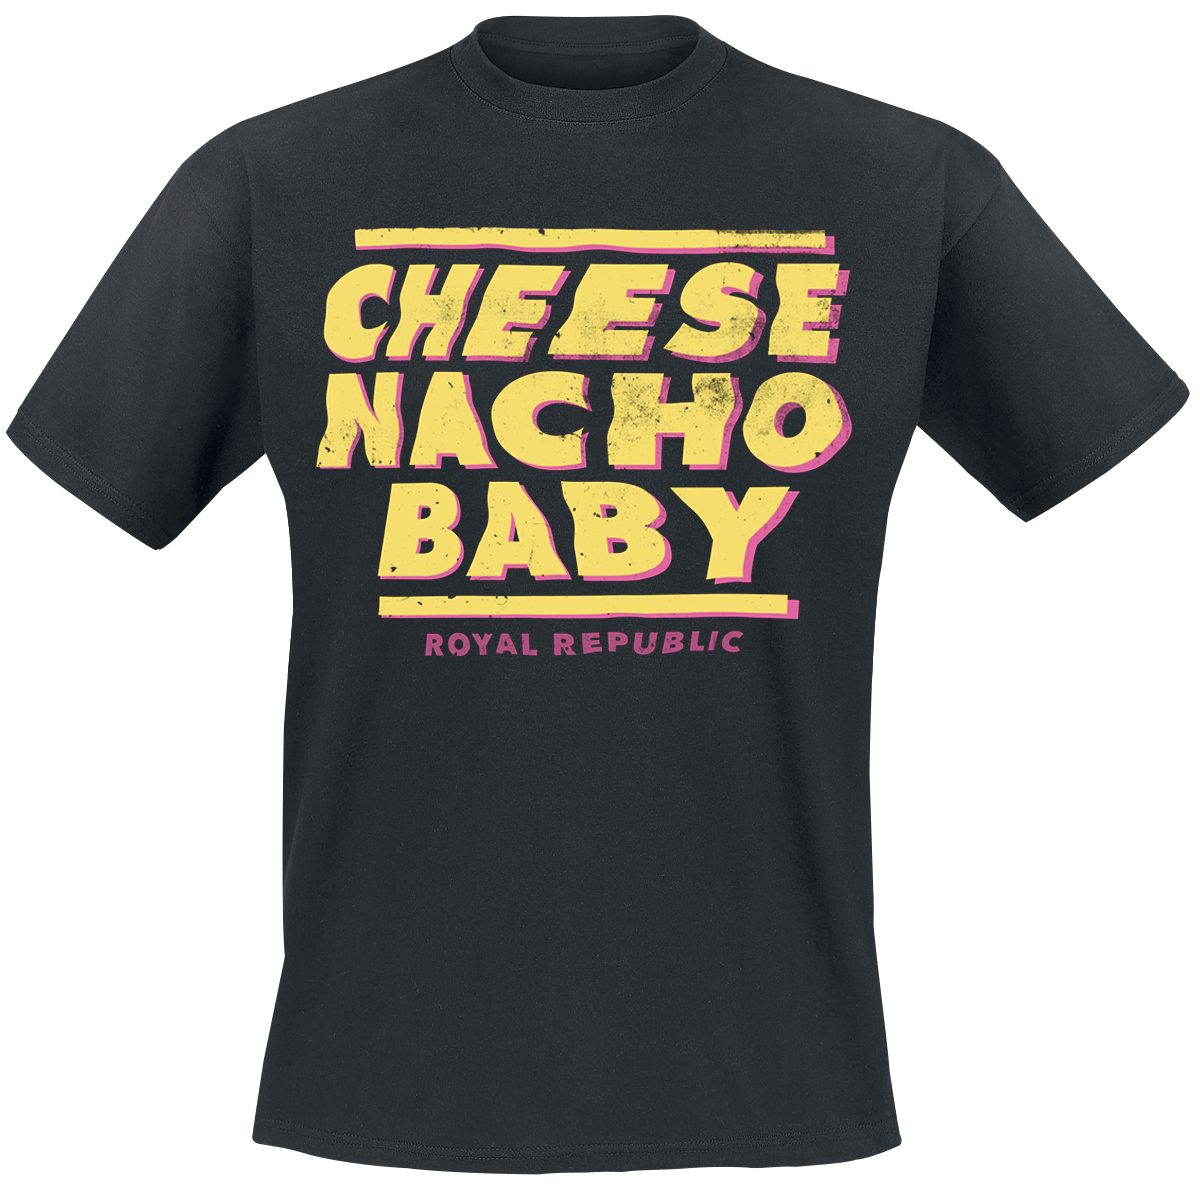 Royal Republic - Cheese Nacho Baby - T-Shirt - schwarz